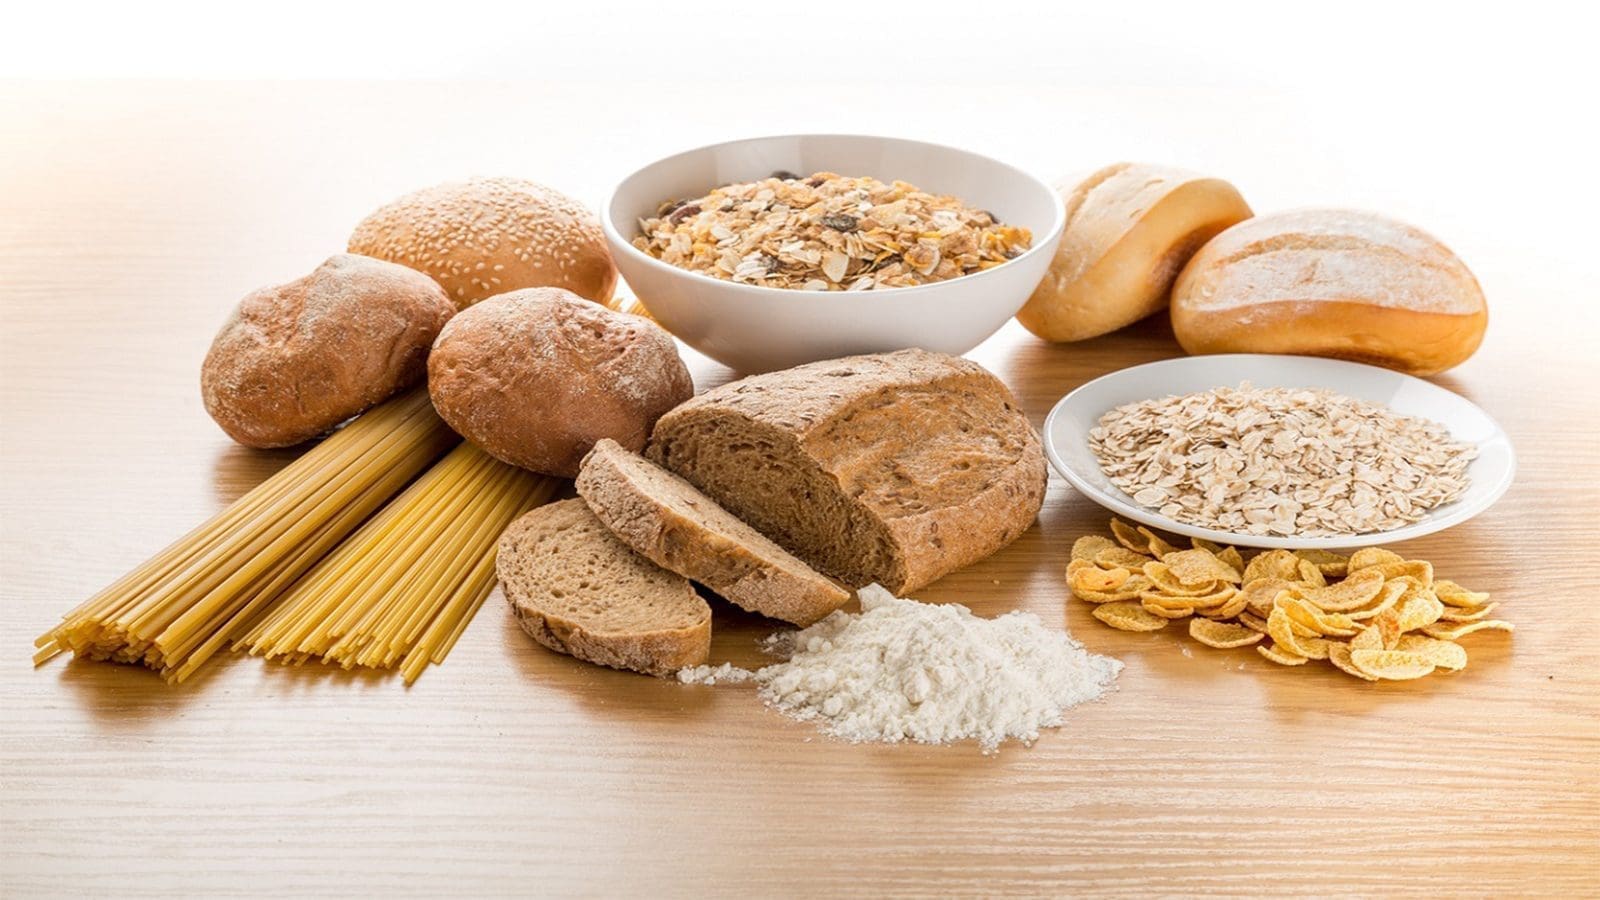 Food Standards Australia New Zealand greenlights sale of HB4 wheat